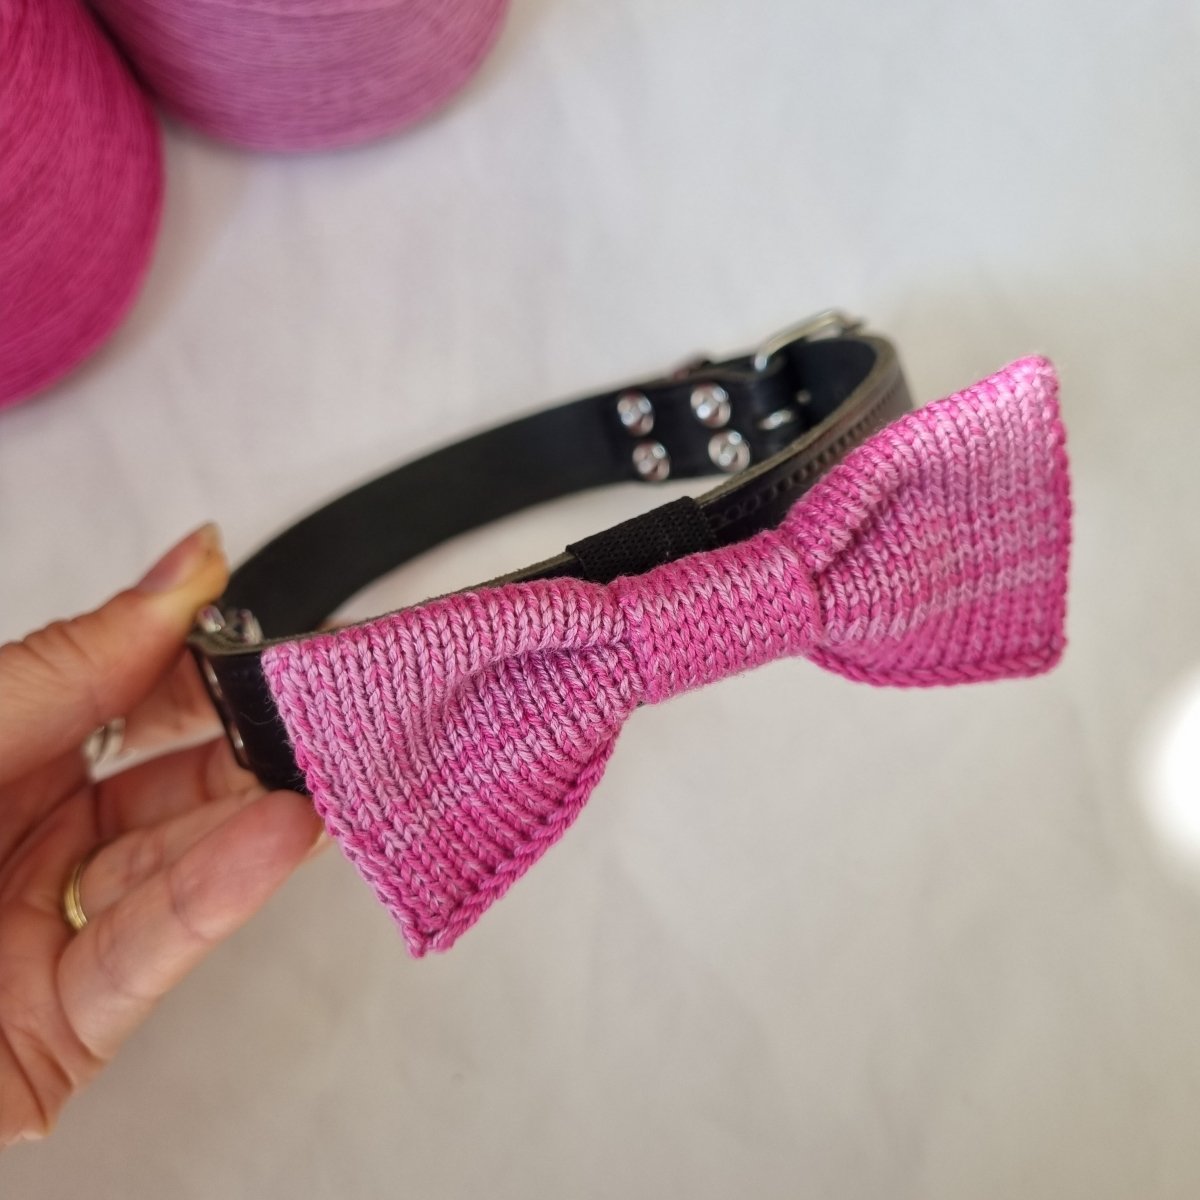 Small - Medium Dog Bow Tie: Raspberry Mix - Wool & Water